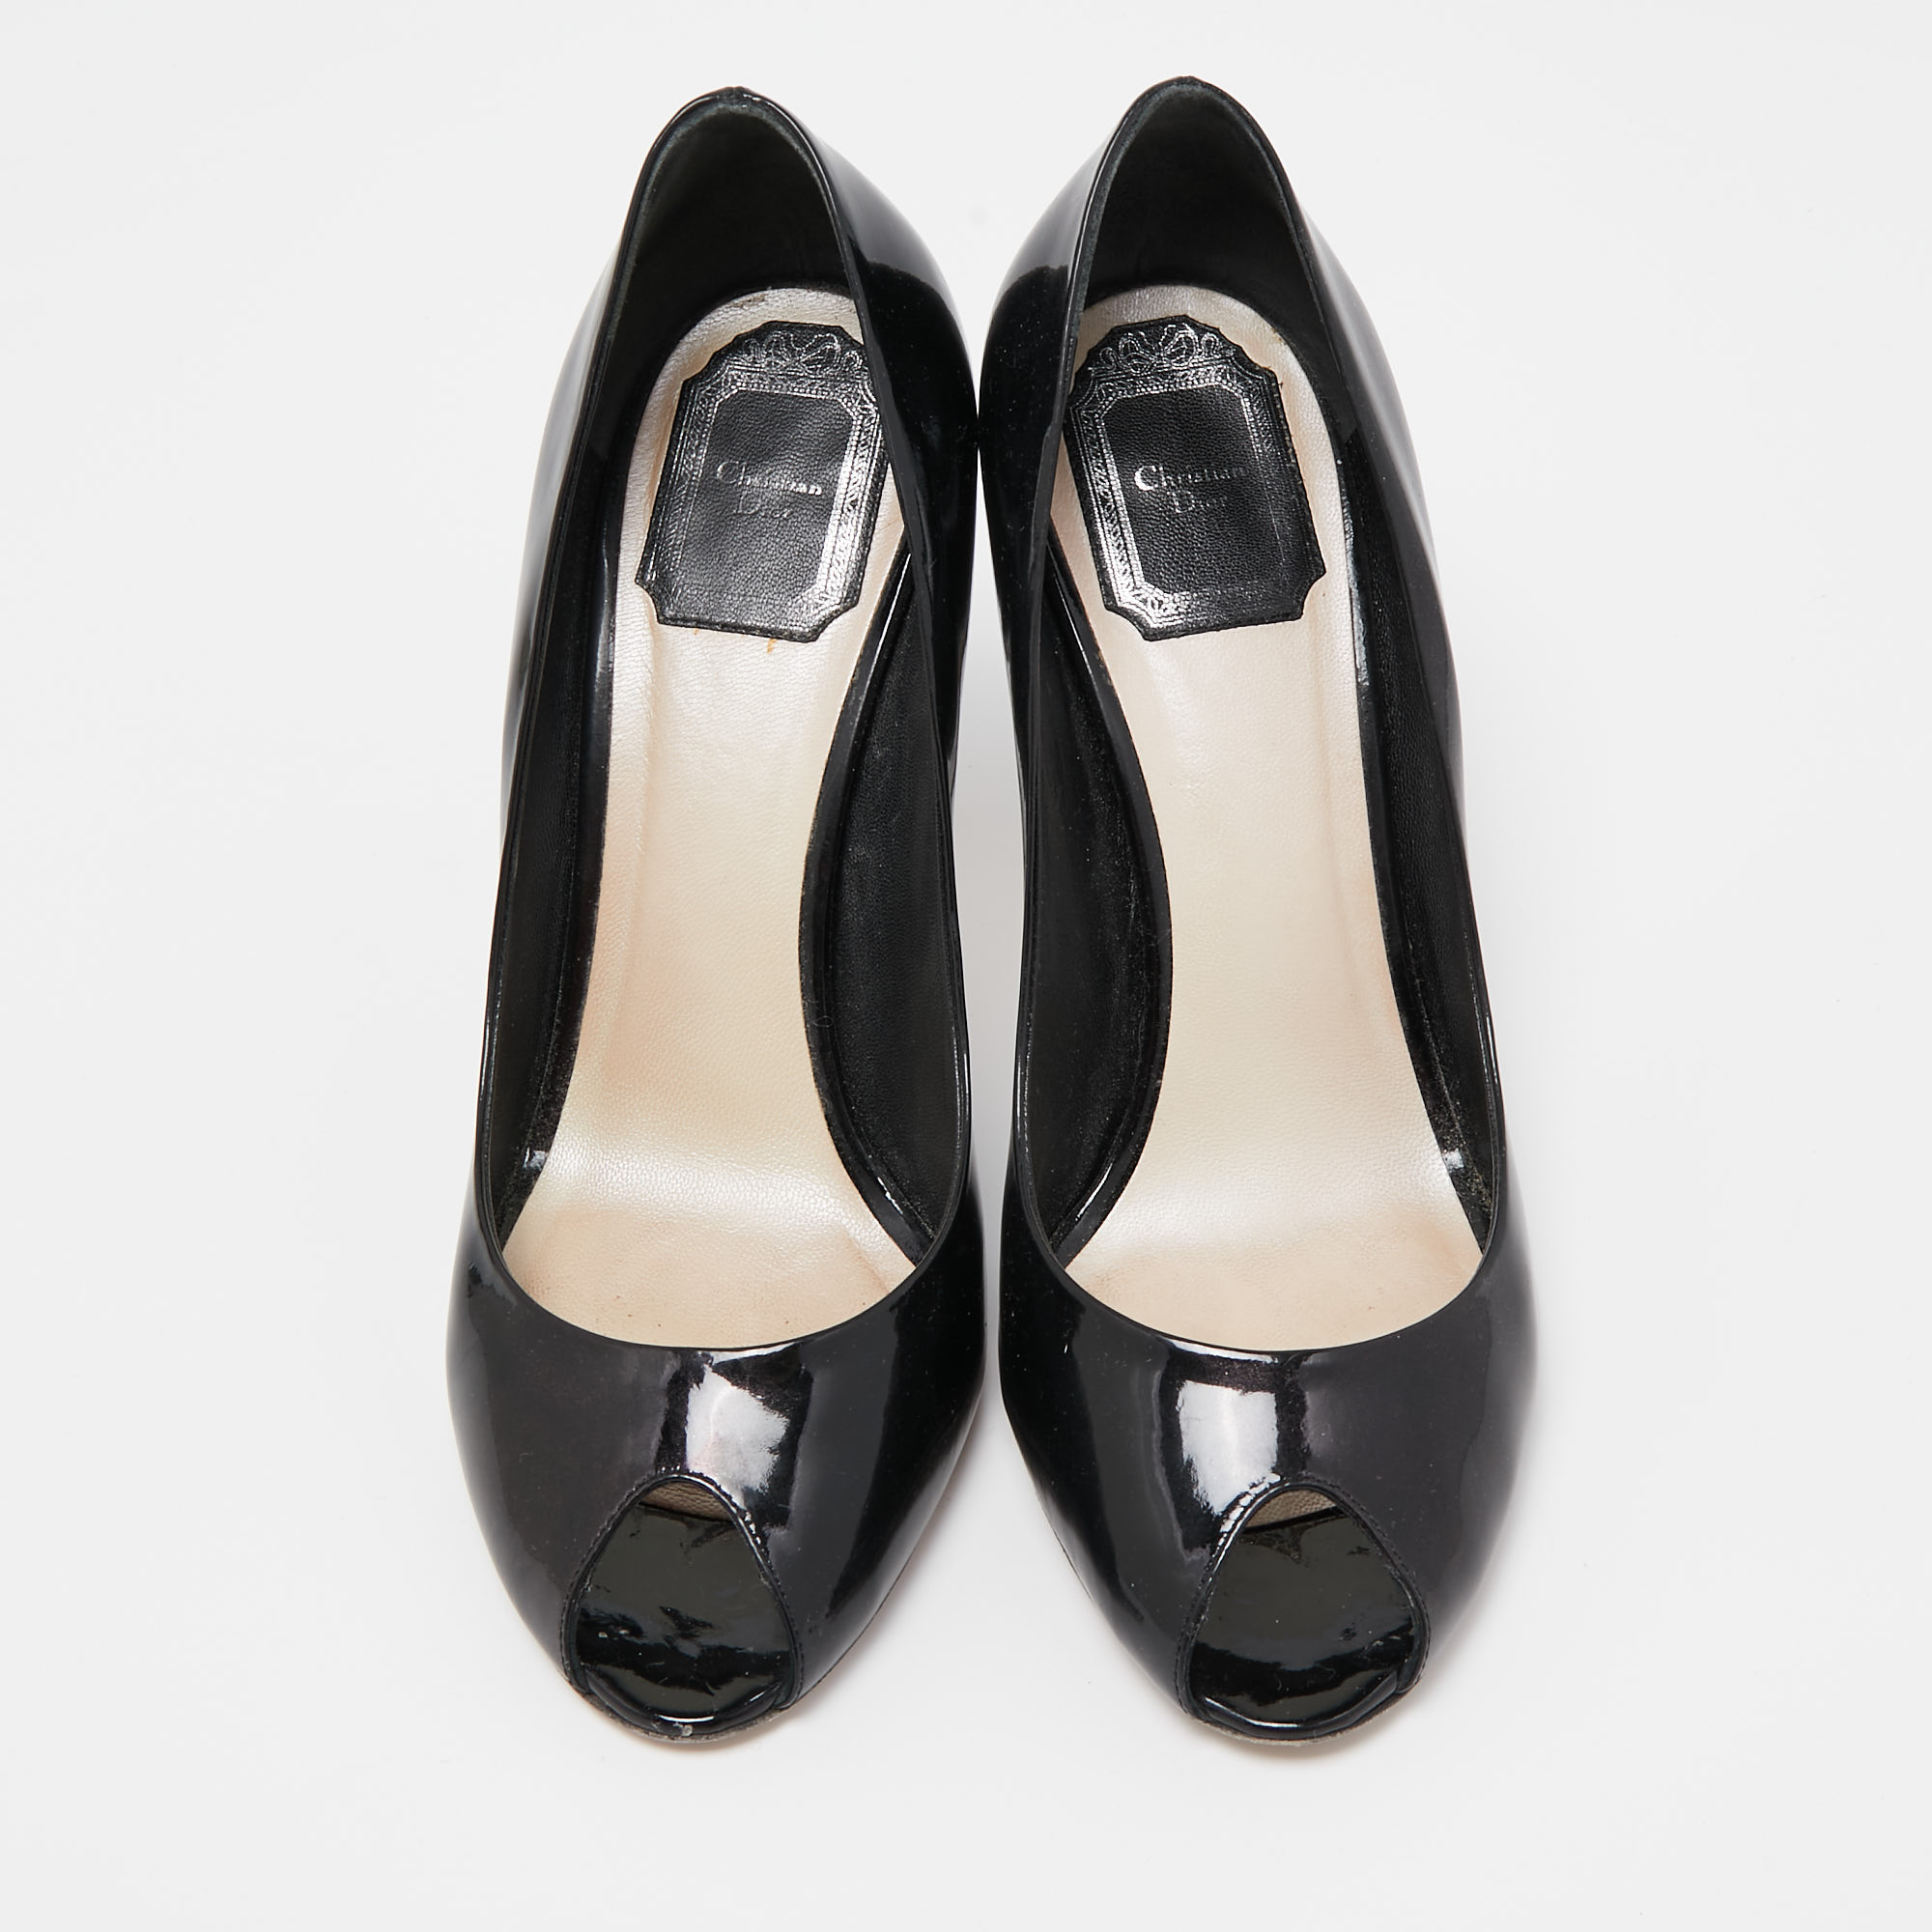 Dior Black Patent Miss Dior Peep Toe Pumps Size 38